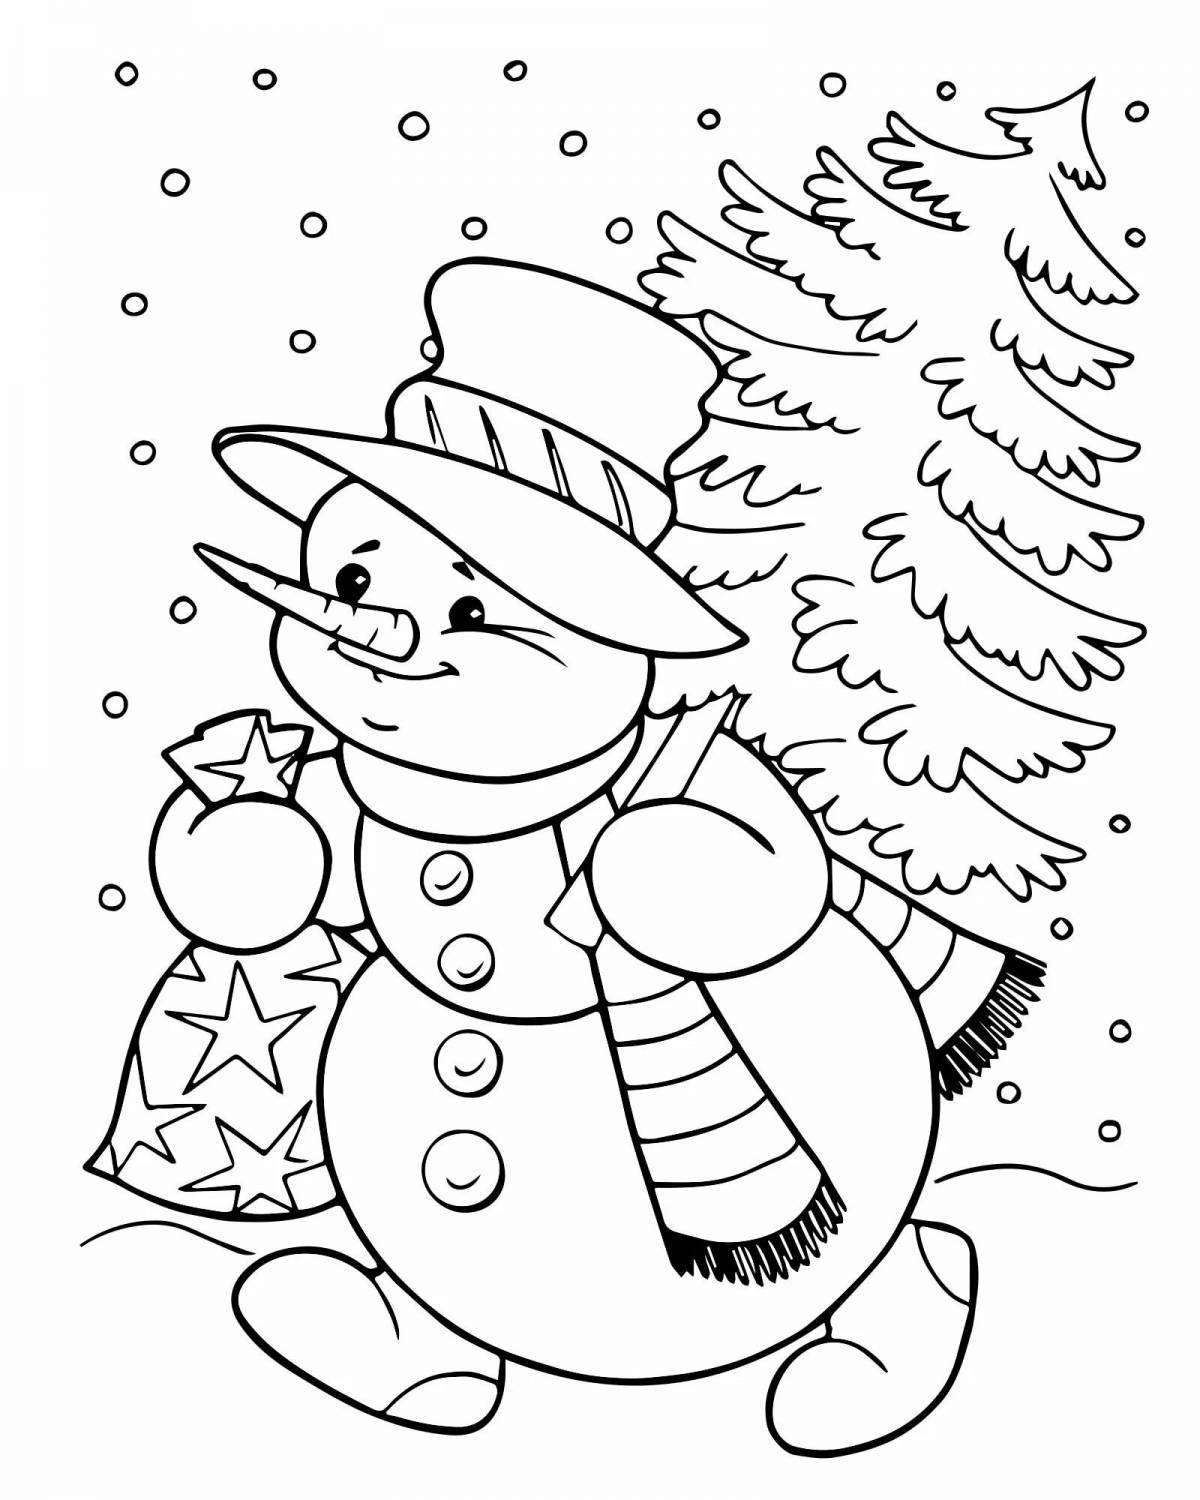 Coloring card sparkling snowman